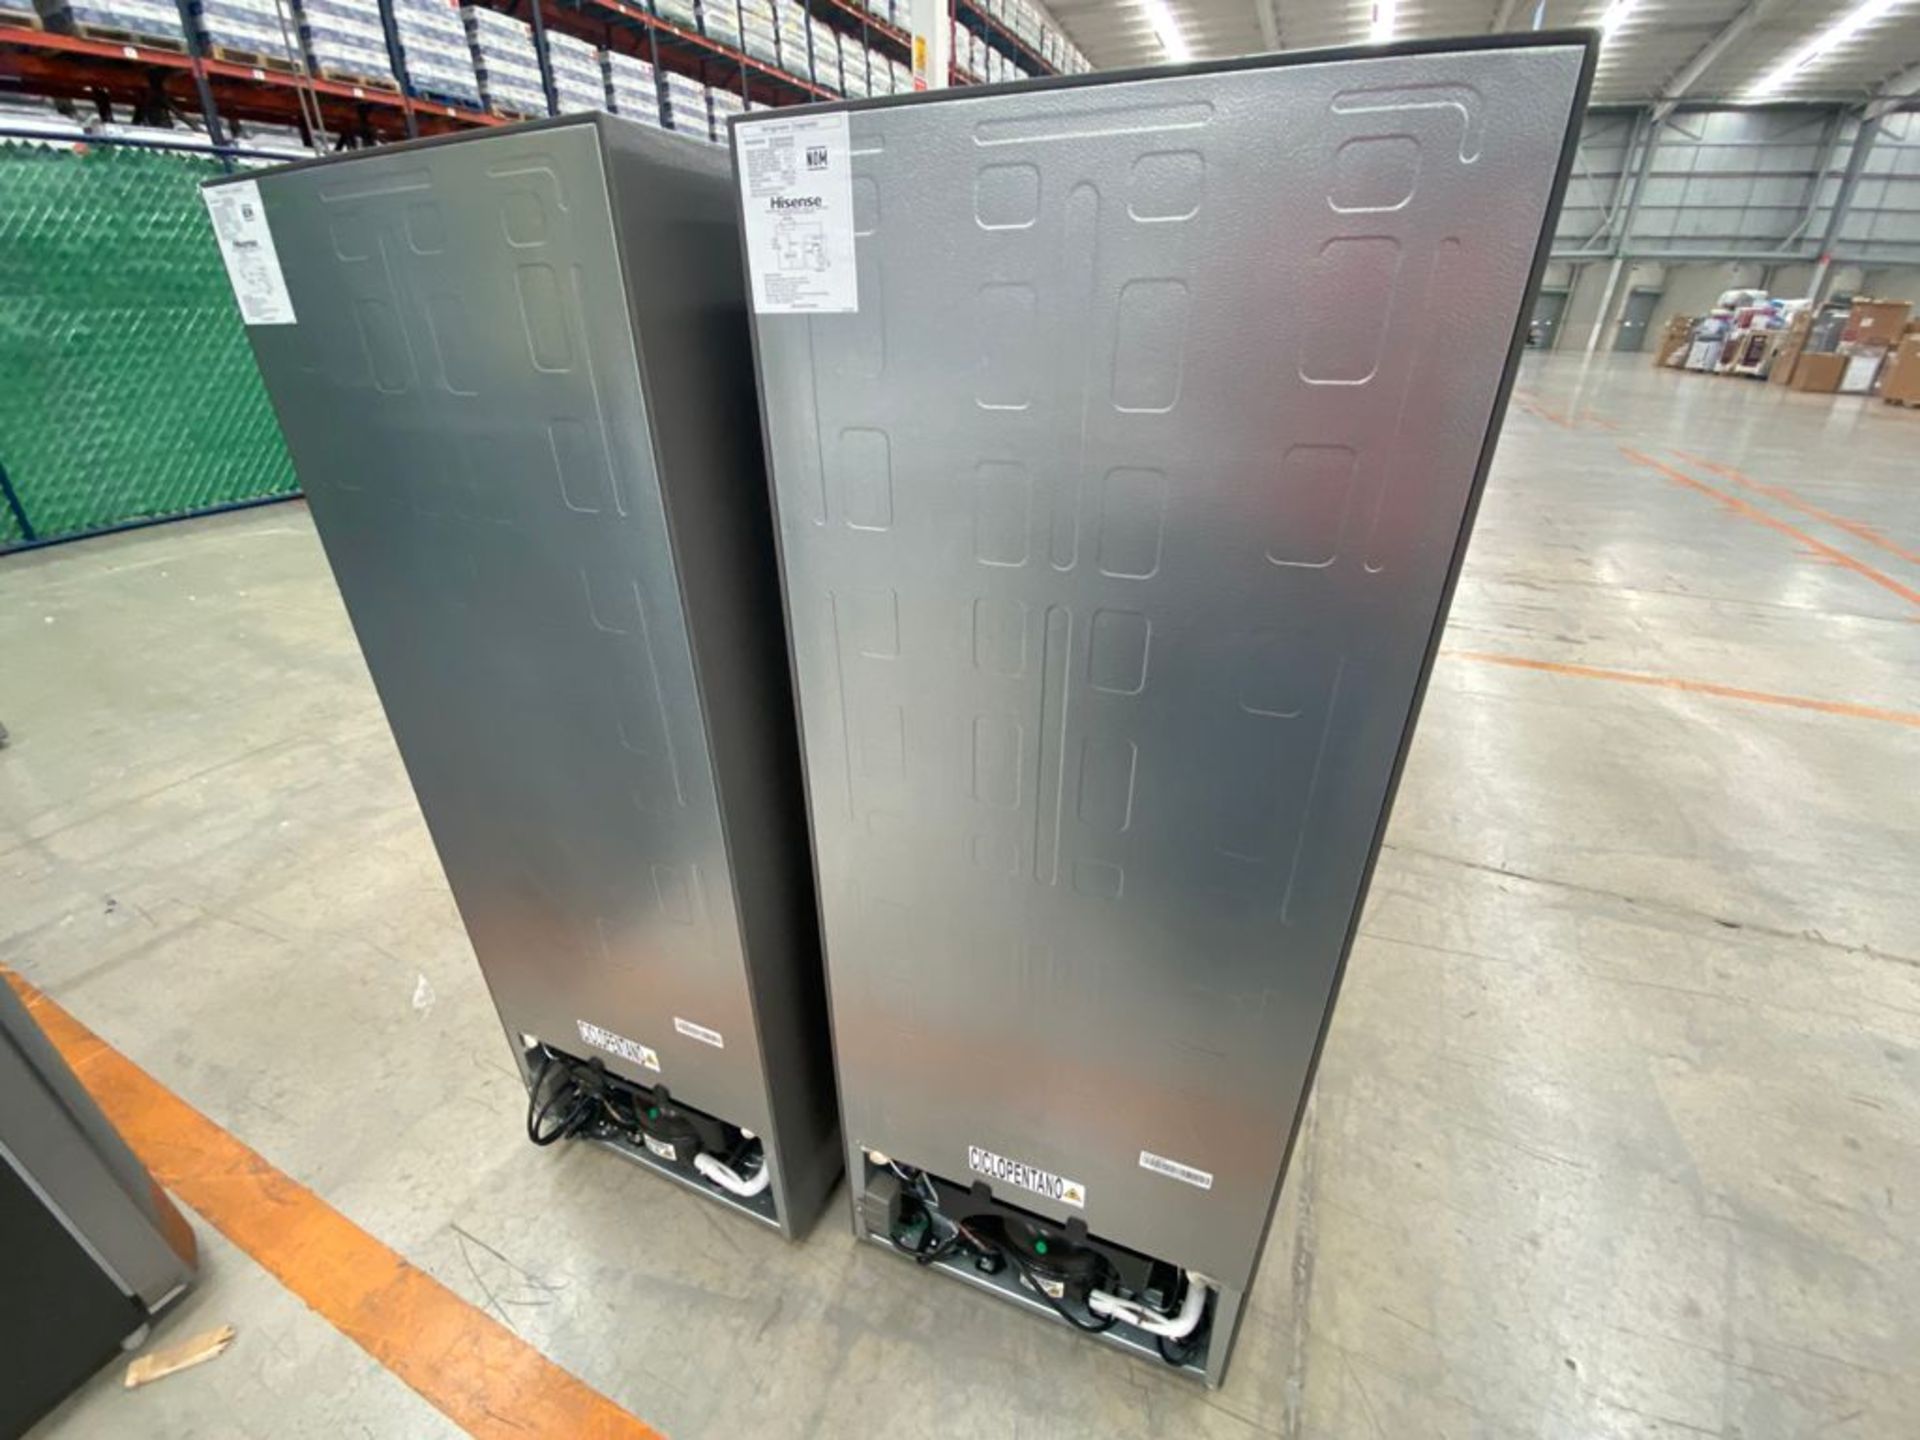 2 Refrigeradores marca Hisense color gris modelo RT80D6AWX - Image 10 of 28